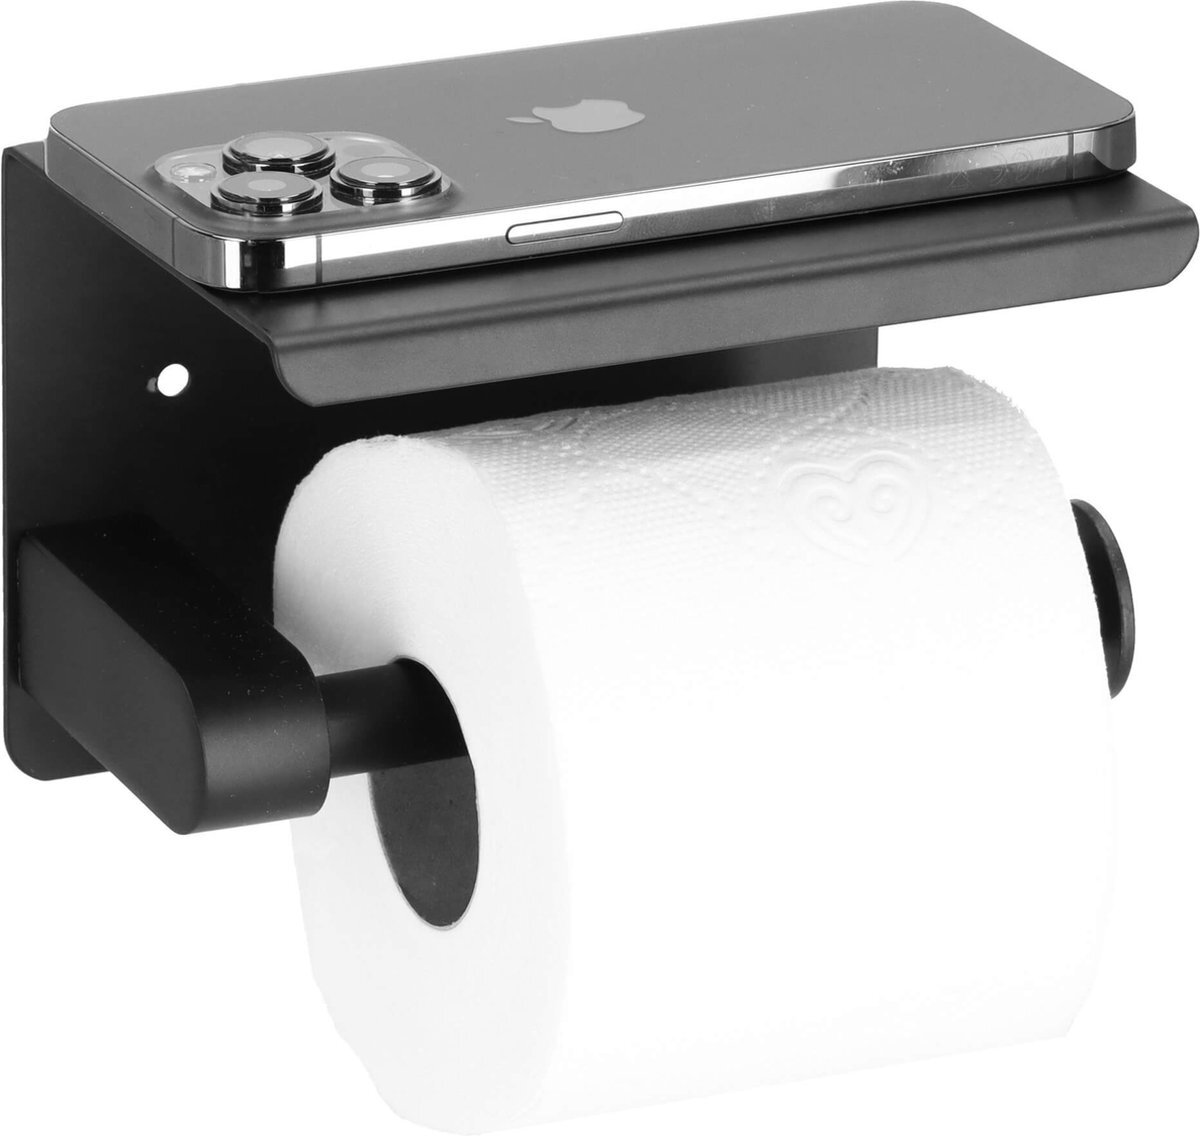 springos WC rolhouder met plankje – Zwart – Zelfklevend – Zonder Boren – Toiletrolhouder RVS